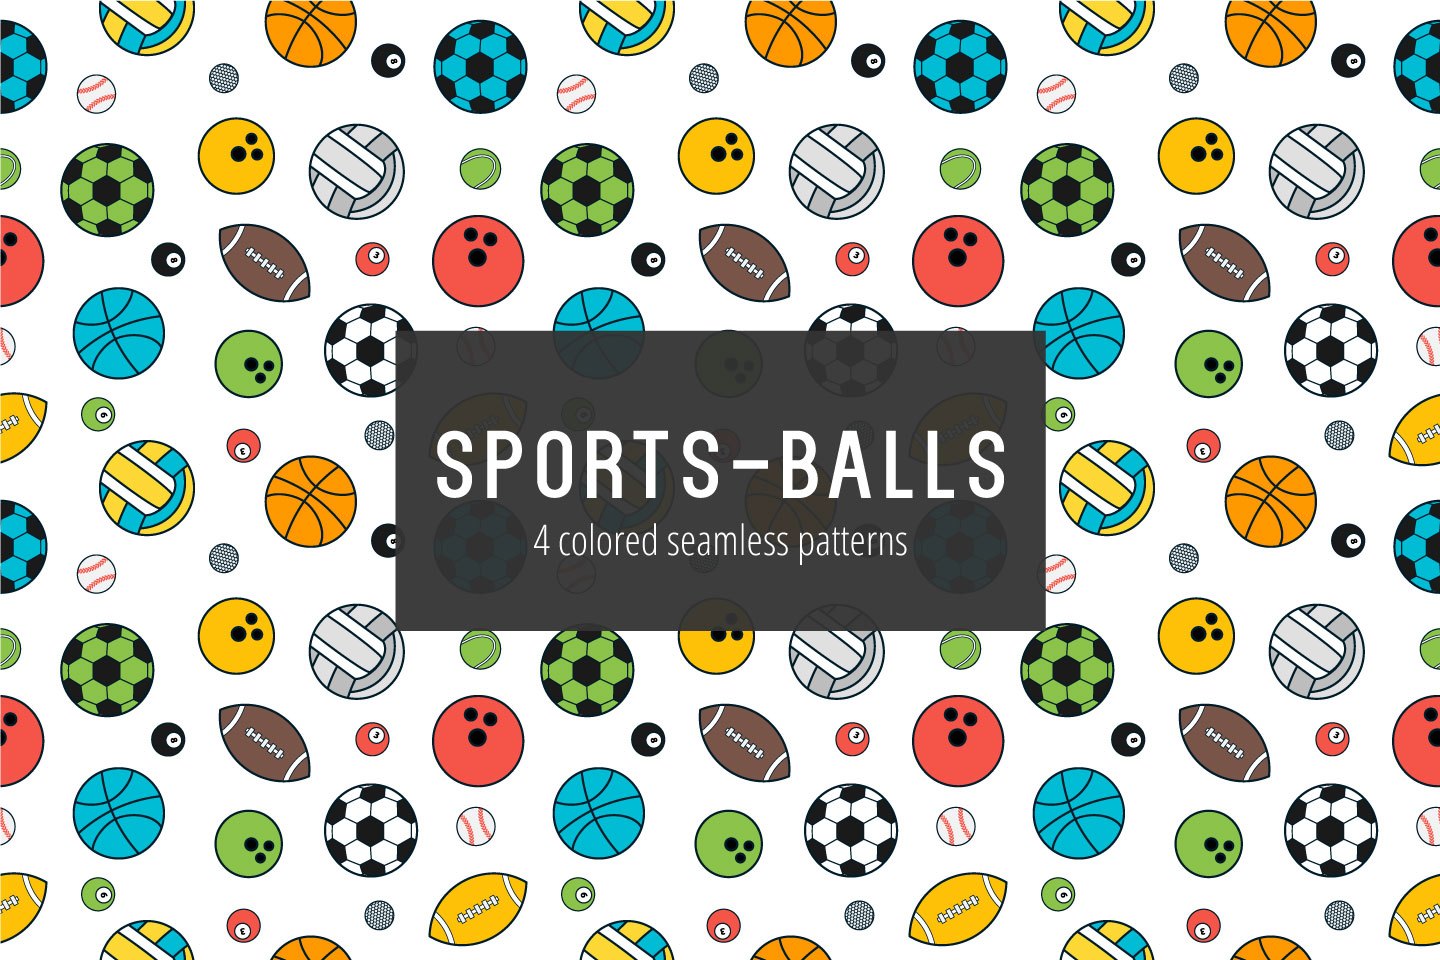 https://img.graphicsurf.com/2018/06/sports-balls-free-vector-seamless-pattern1.jpg